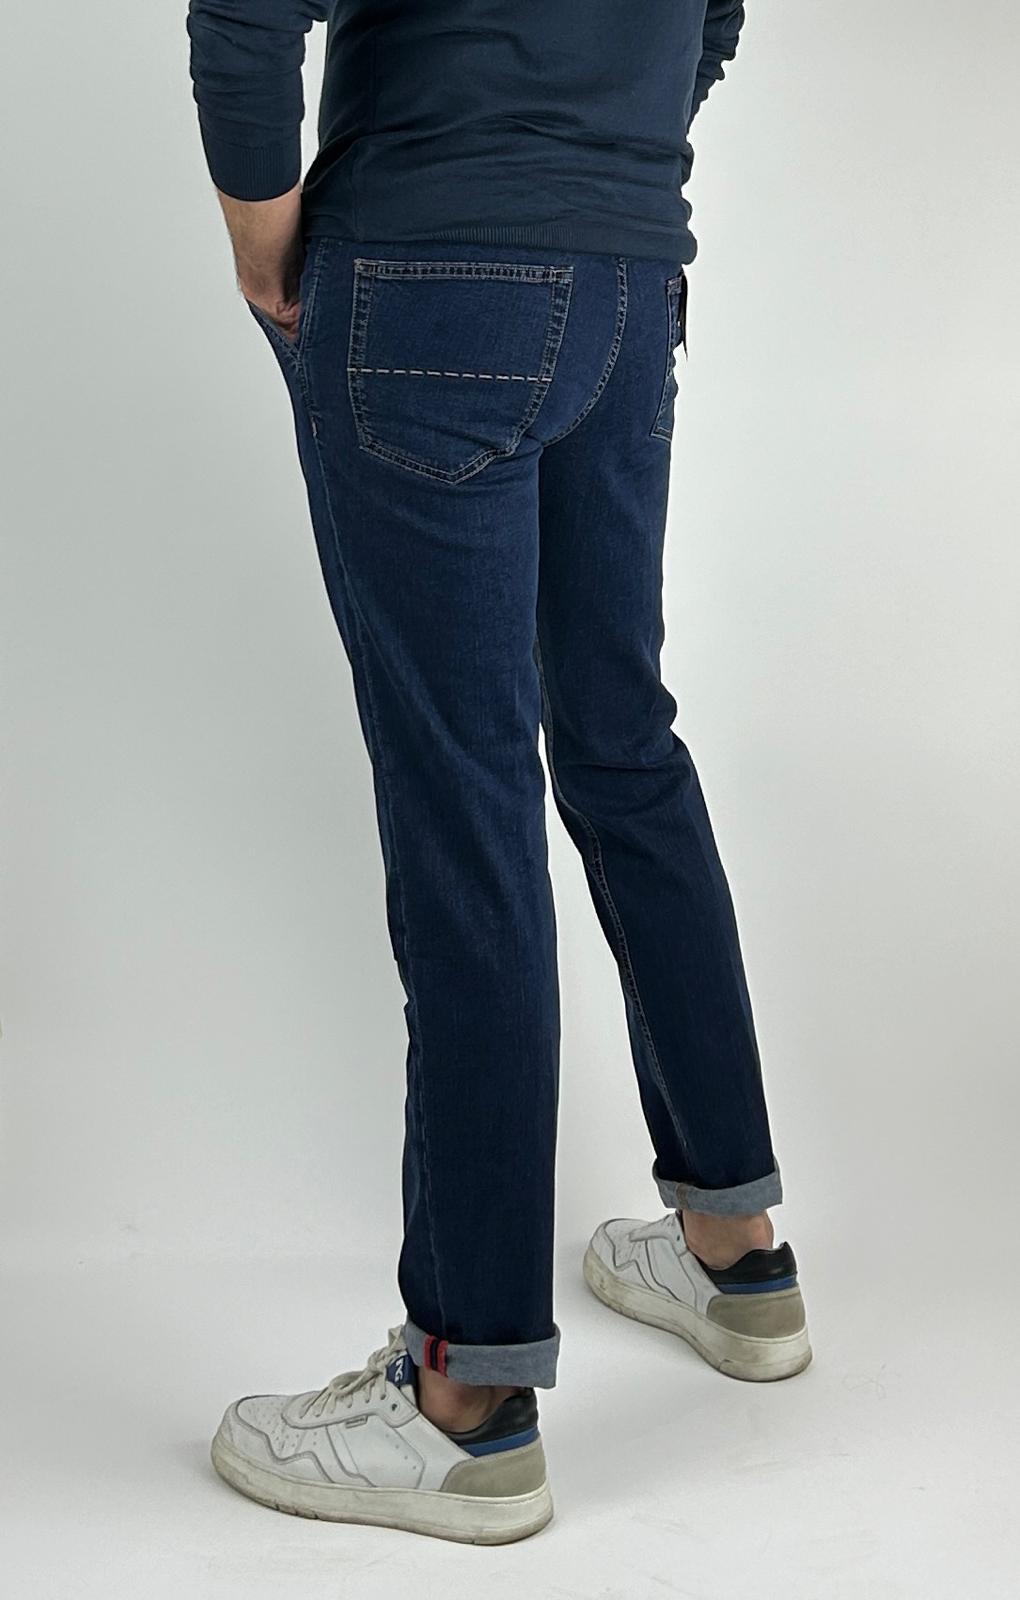 B700 Jeans Uomo-mod. L701-5026